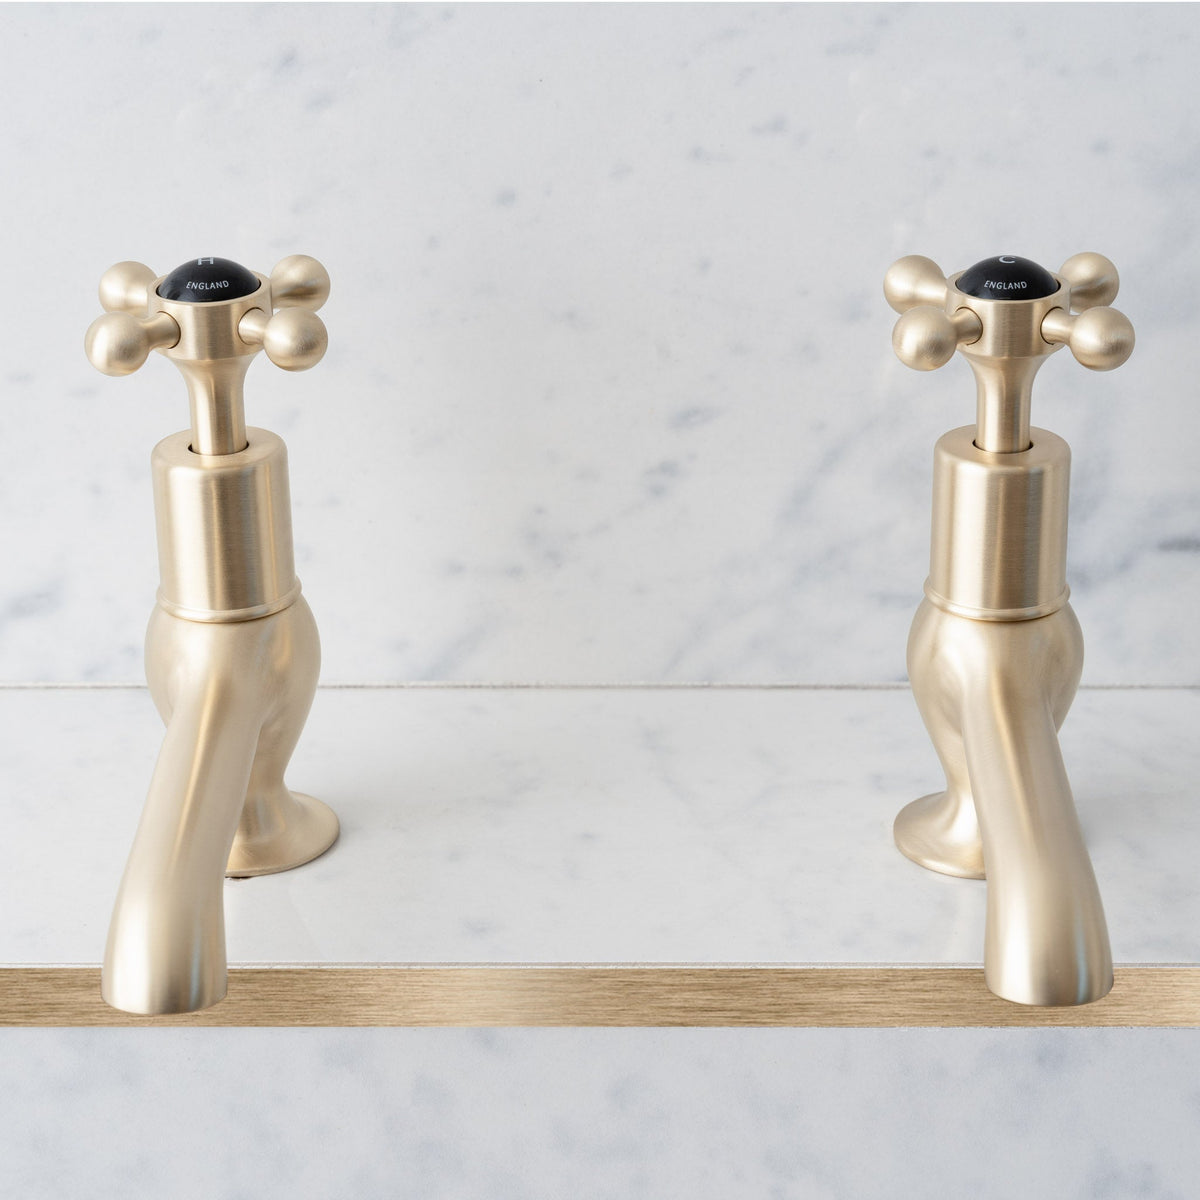 Grayling Long Nose Black Ceramic Cross Handle Single Hole Pillar Tap Bathroom Sink Faucets (Pair) - Rutland London (USA)